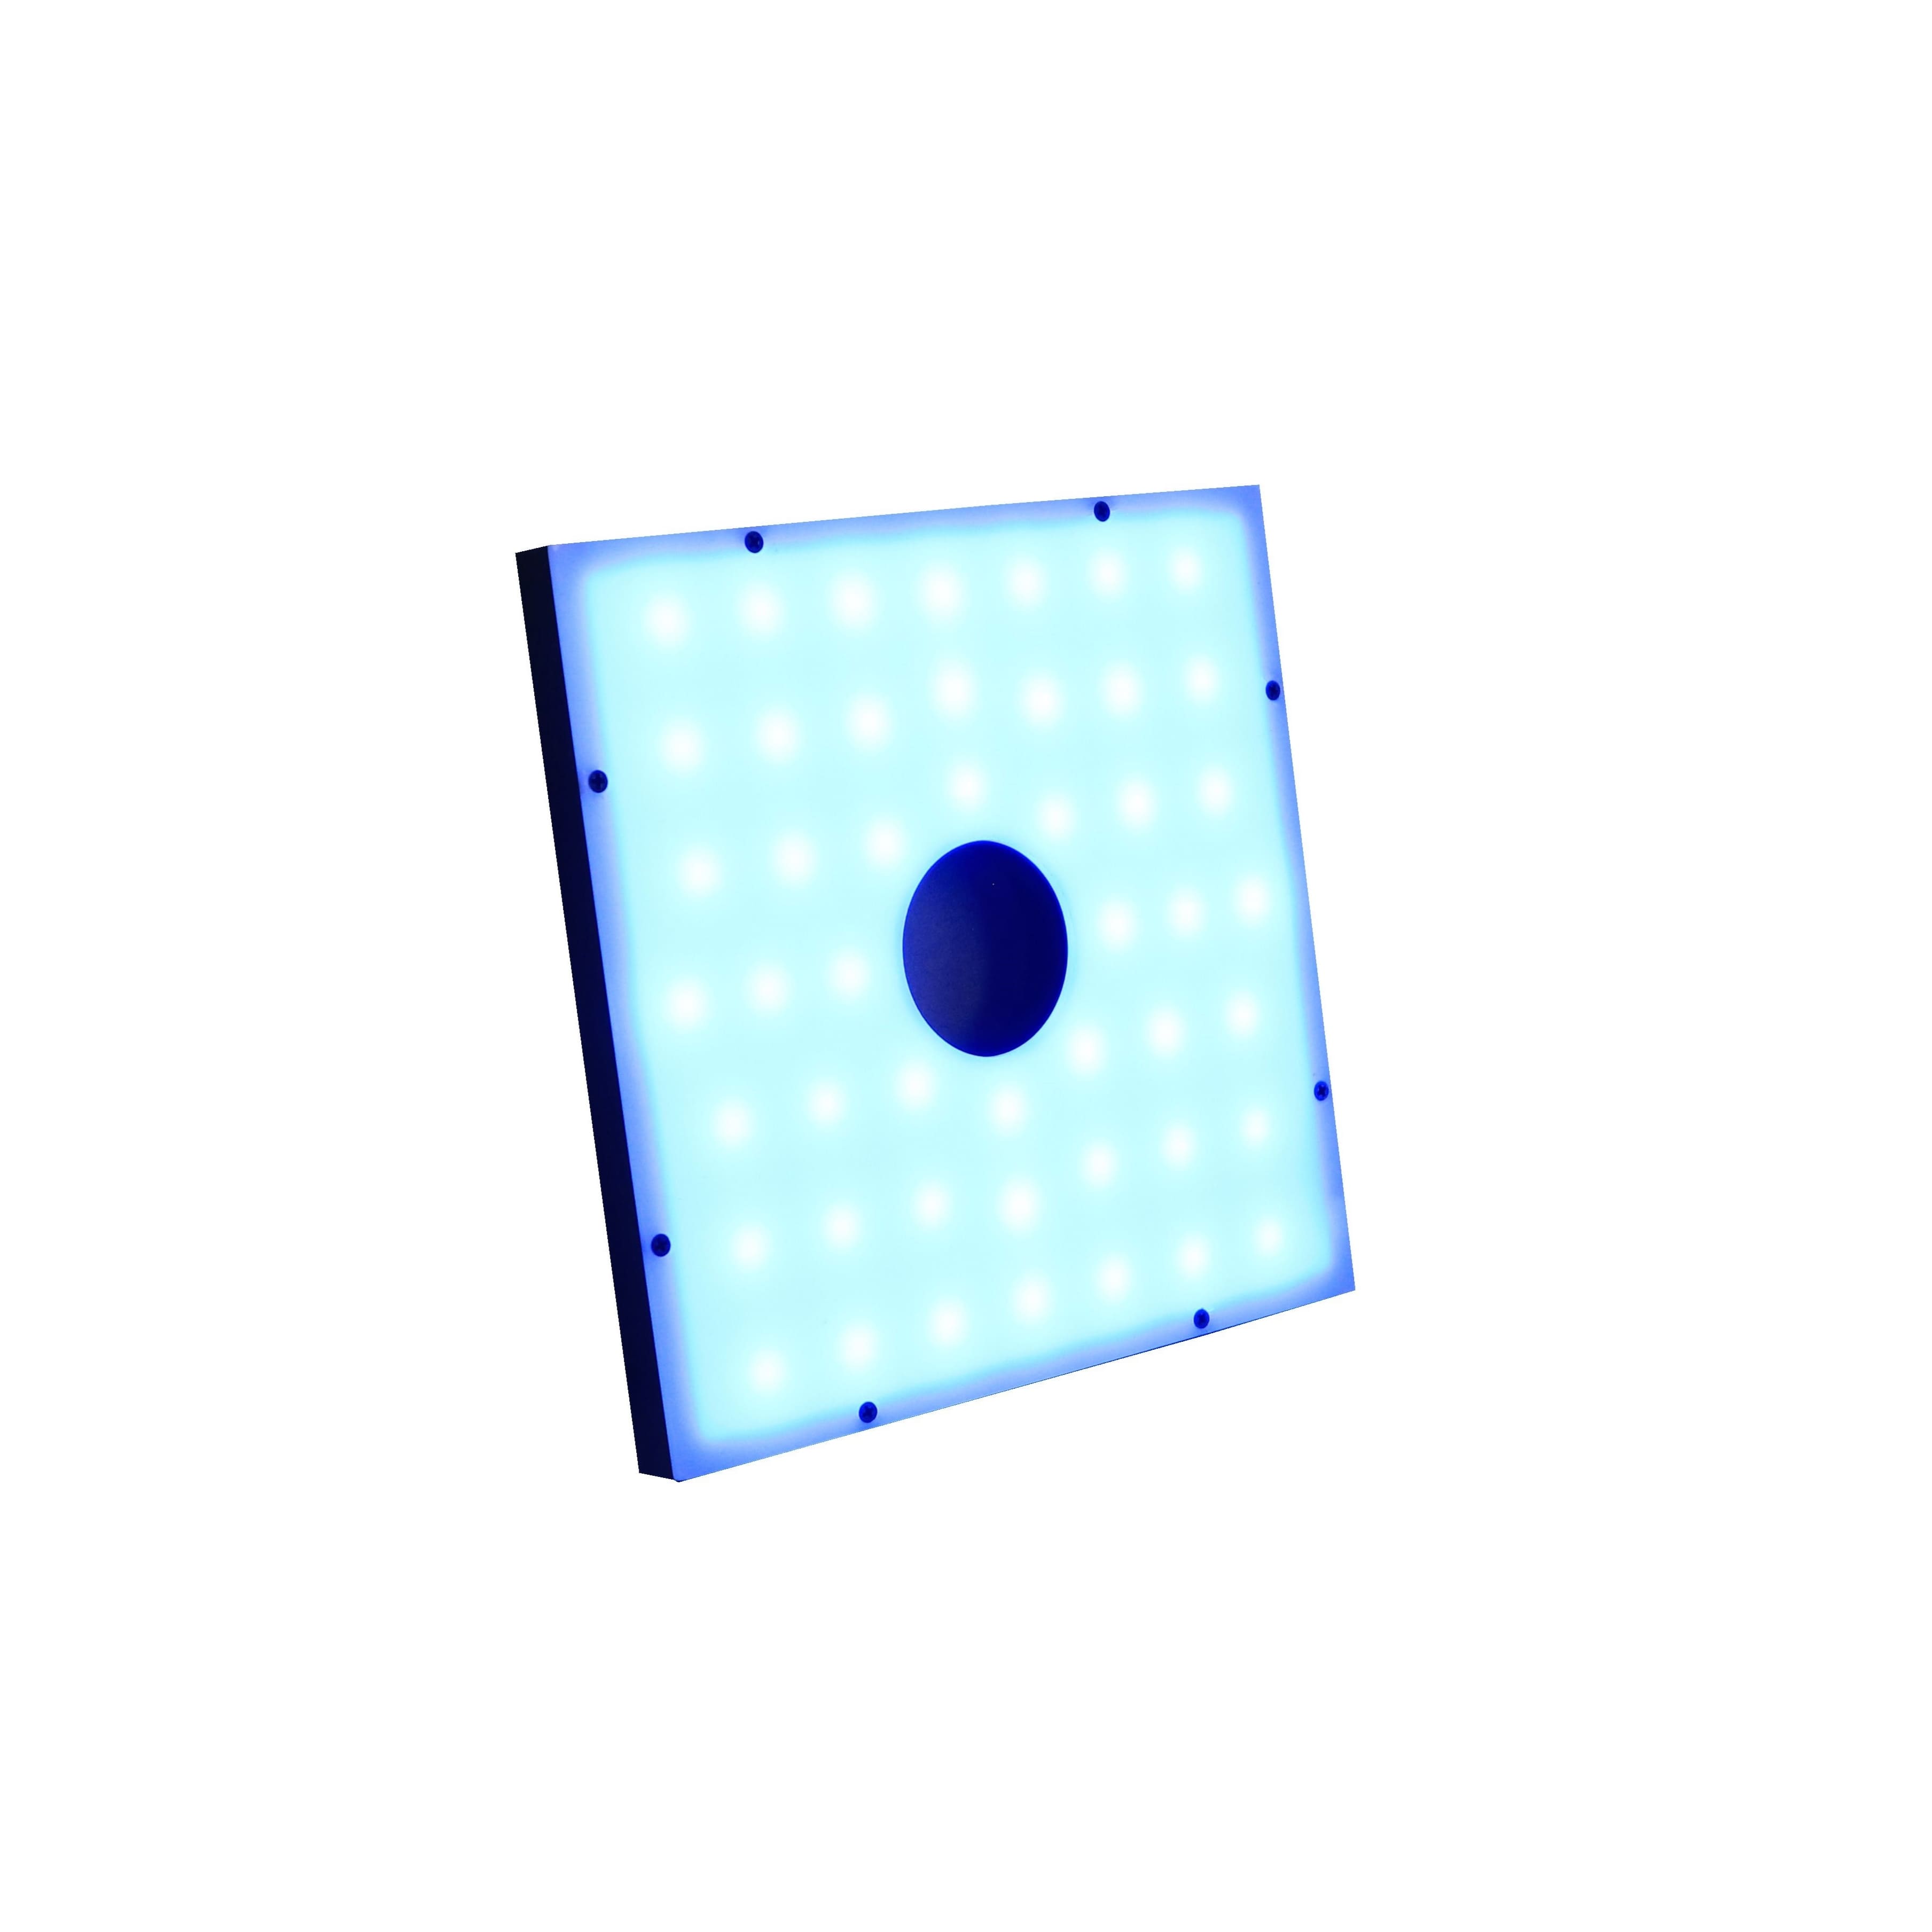 DSQ2-208/208 Diffused Square Panel Lights – Blue